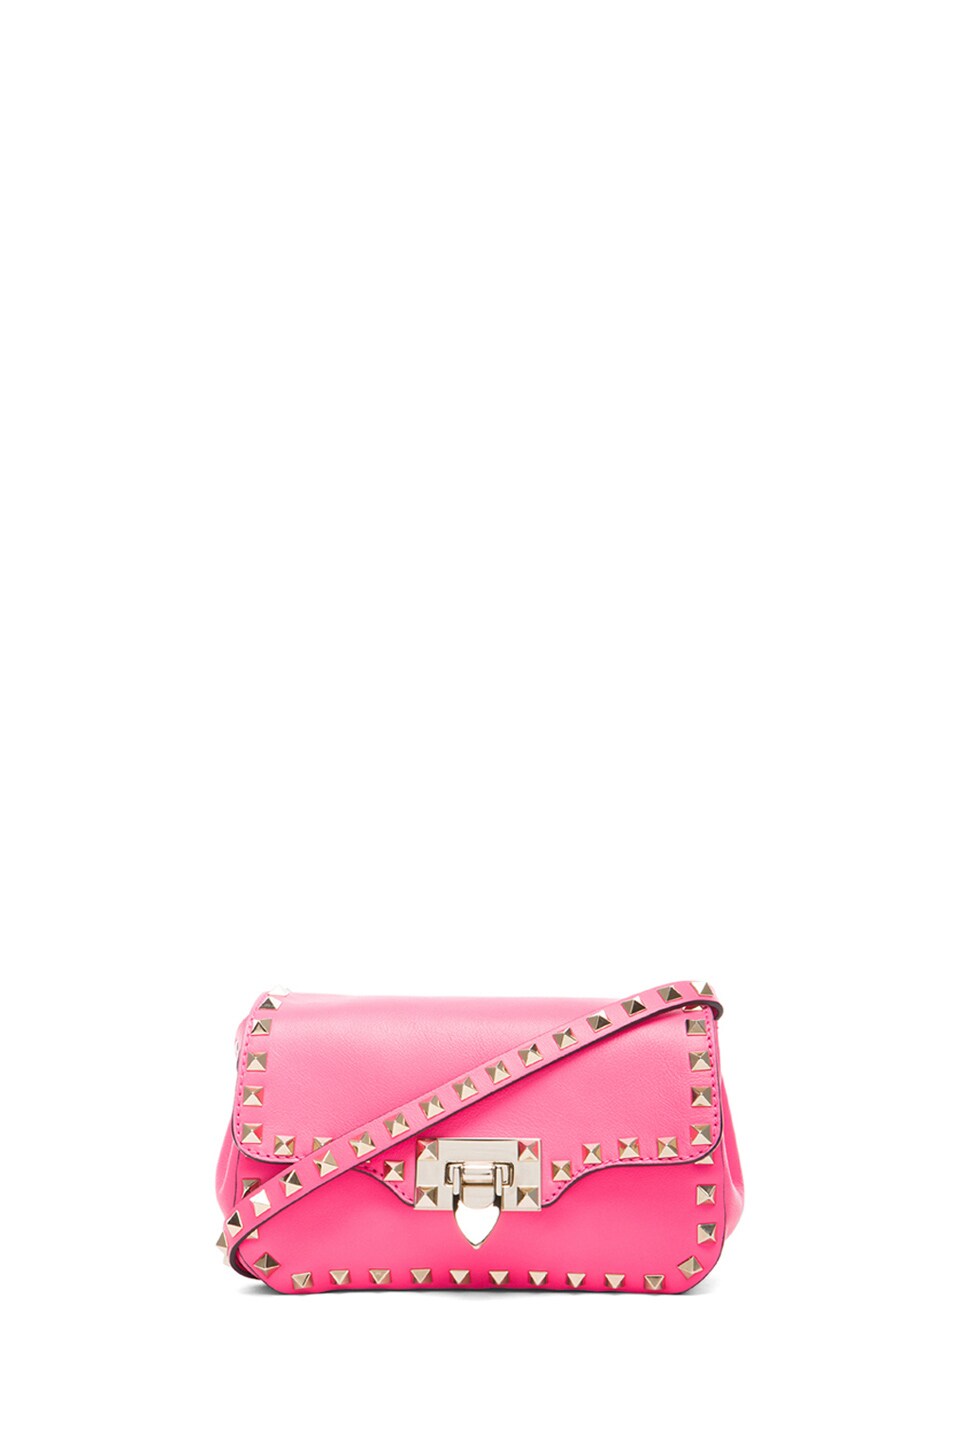 Valentino Rockstud Crossbody Bag in Fluo Pink | FWRD